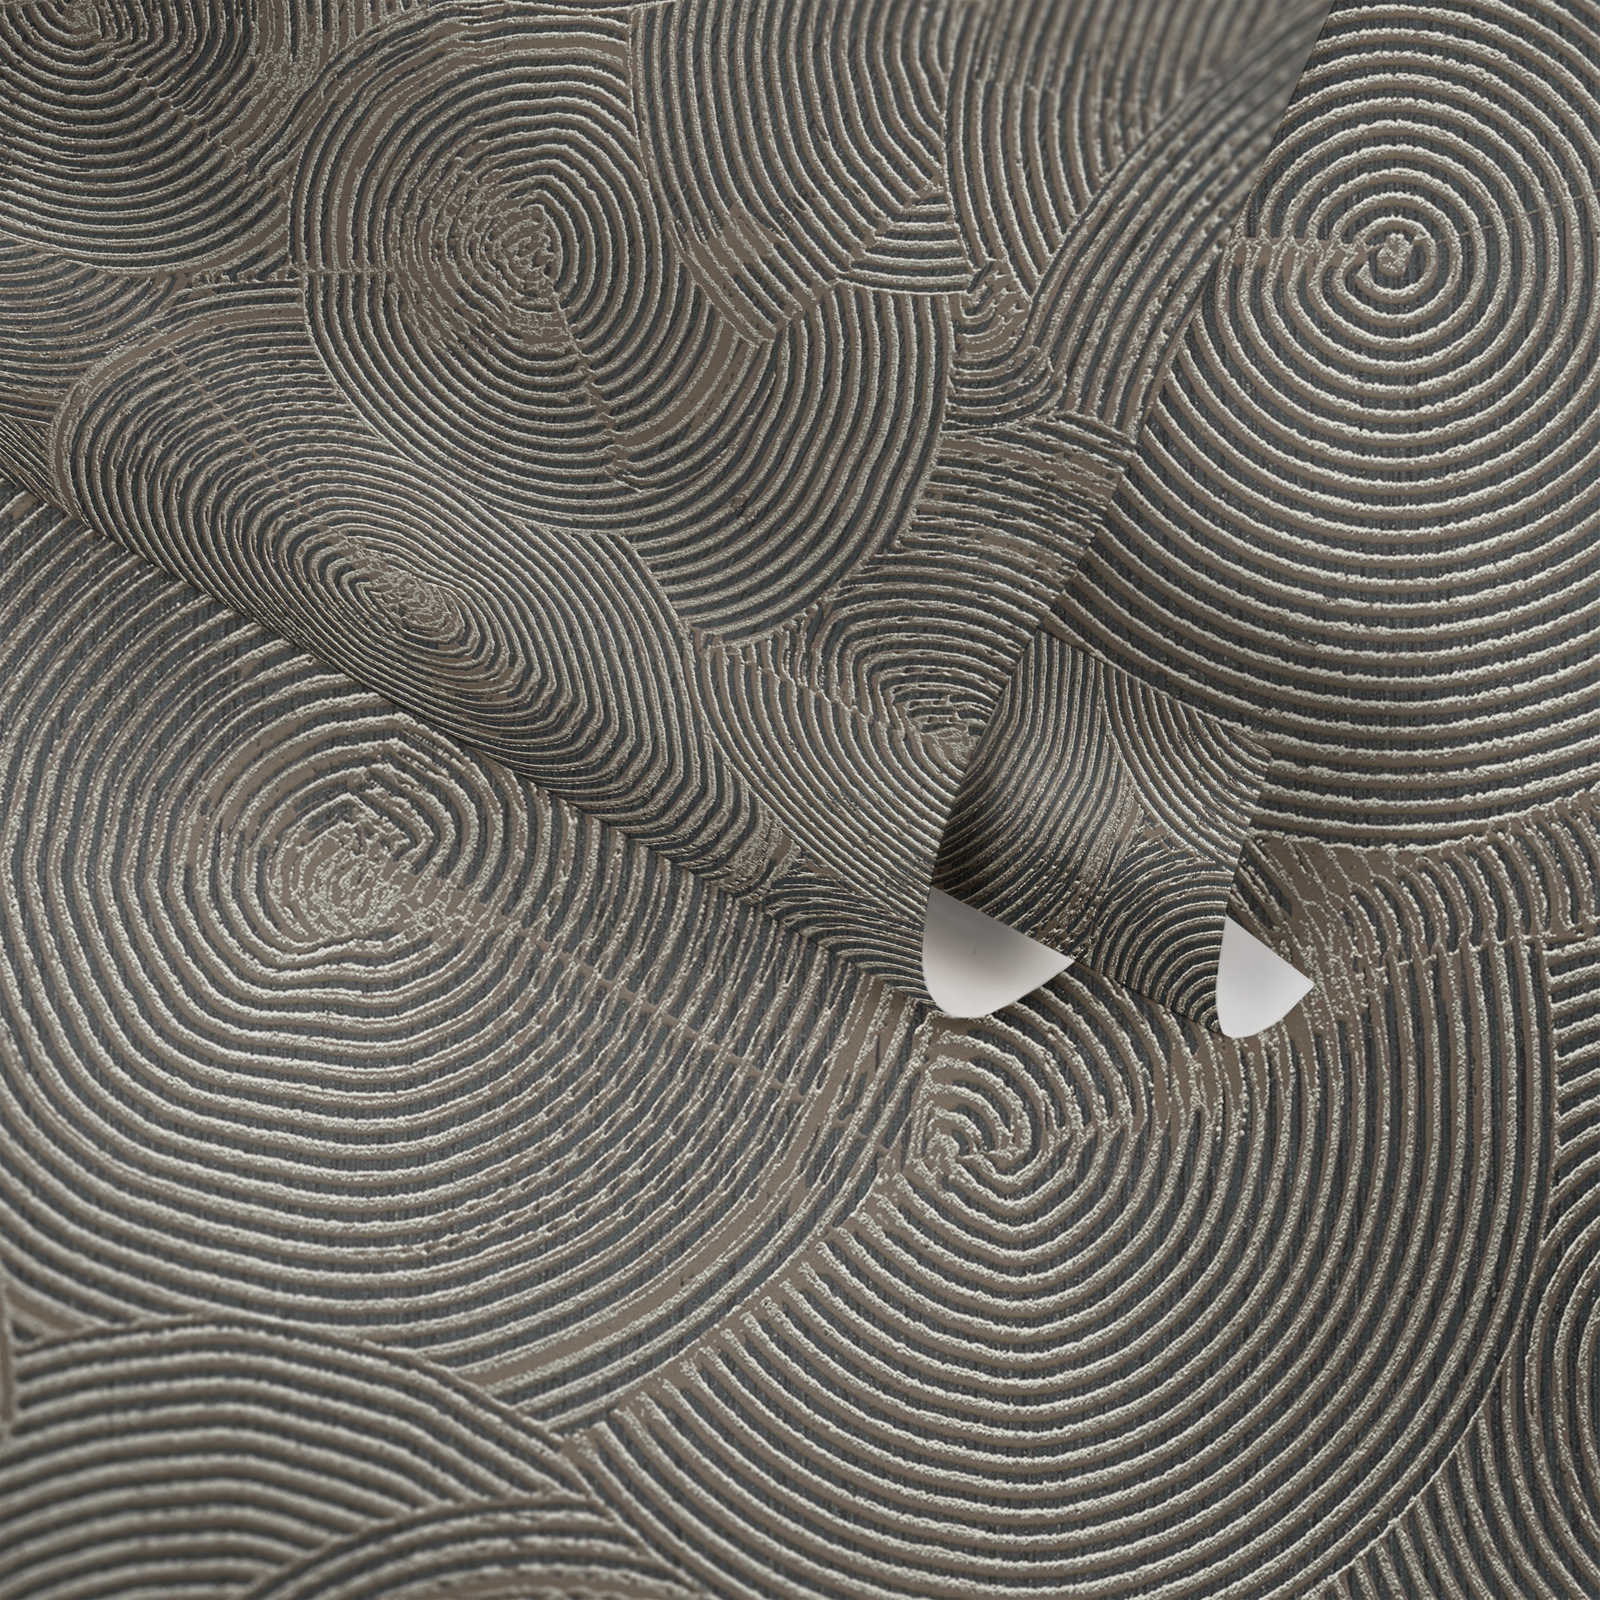             Wallpaper modern plaster look with metallic effect - brown, metallic, black
        